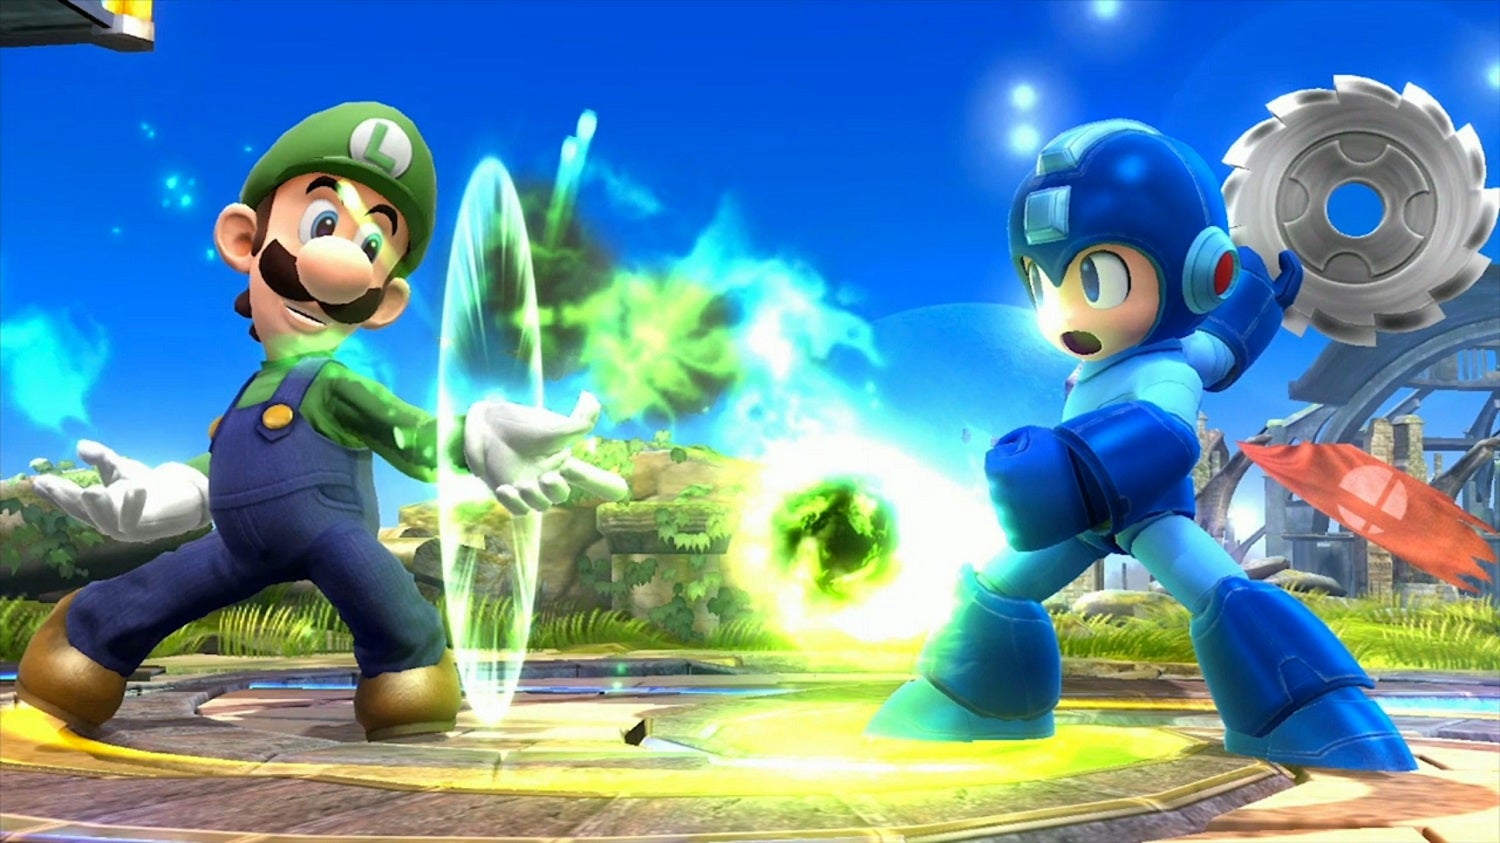 Obrazki dla Bijatyka Super Smash Bros. Wii U i figurki amiibo z datami premier